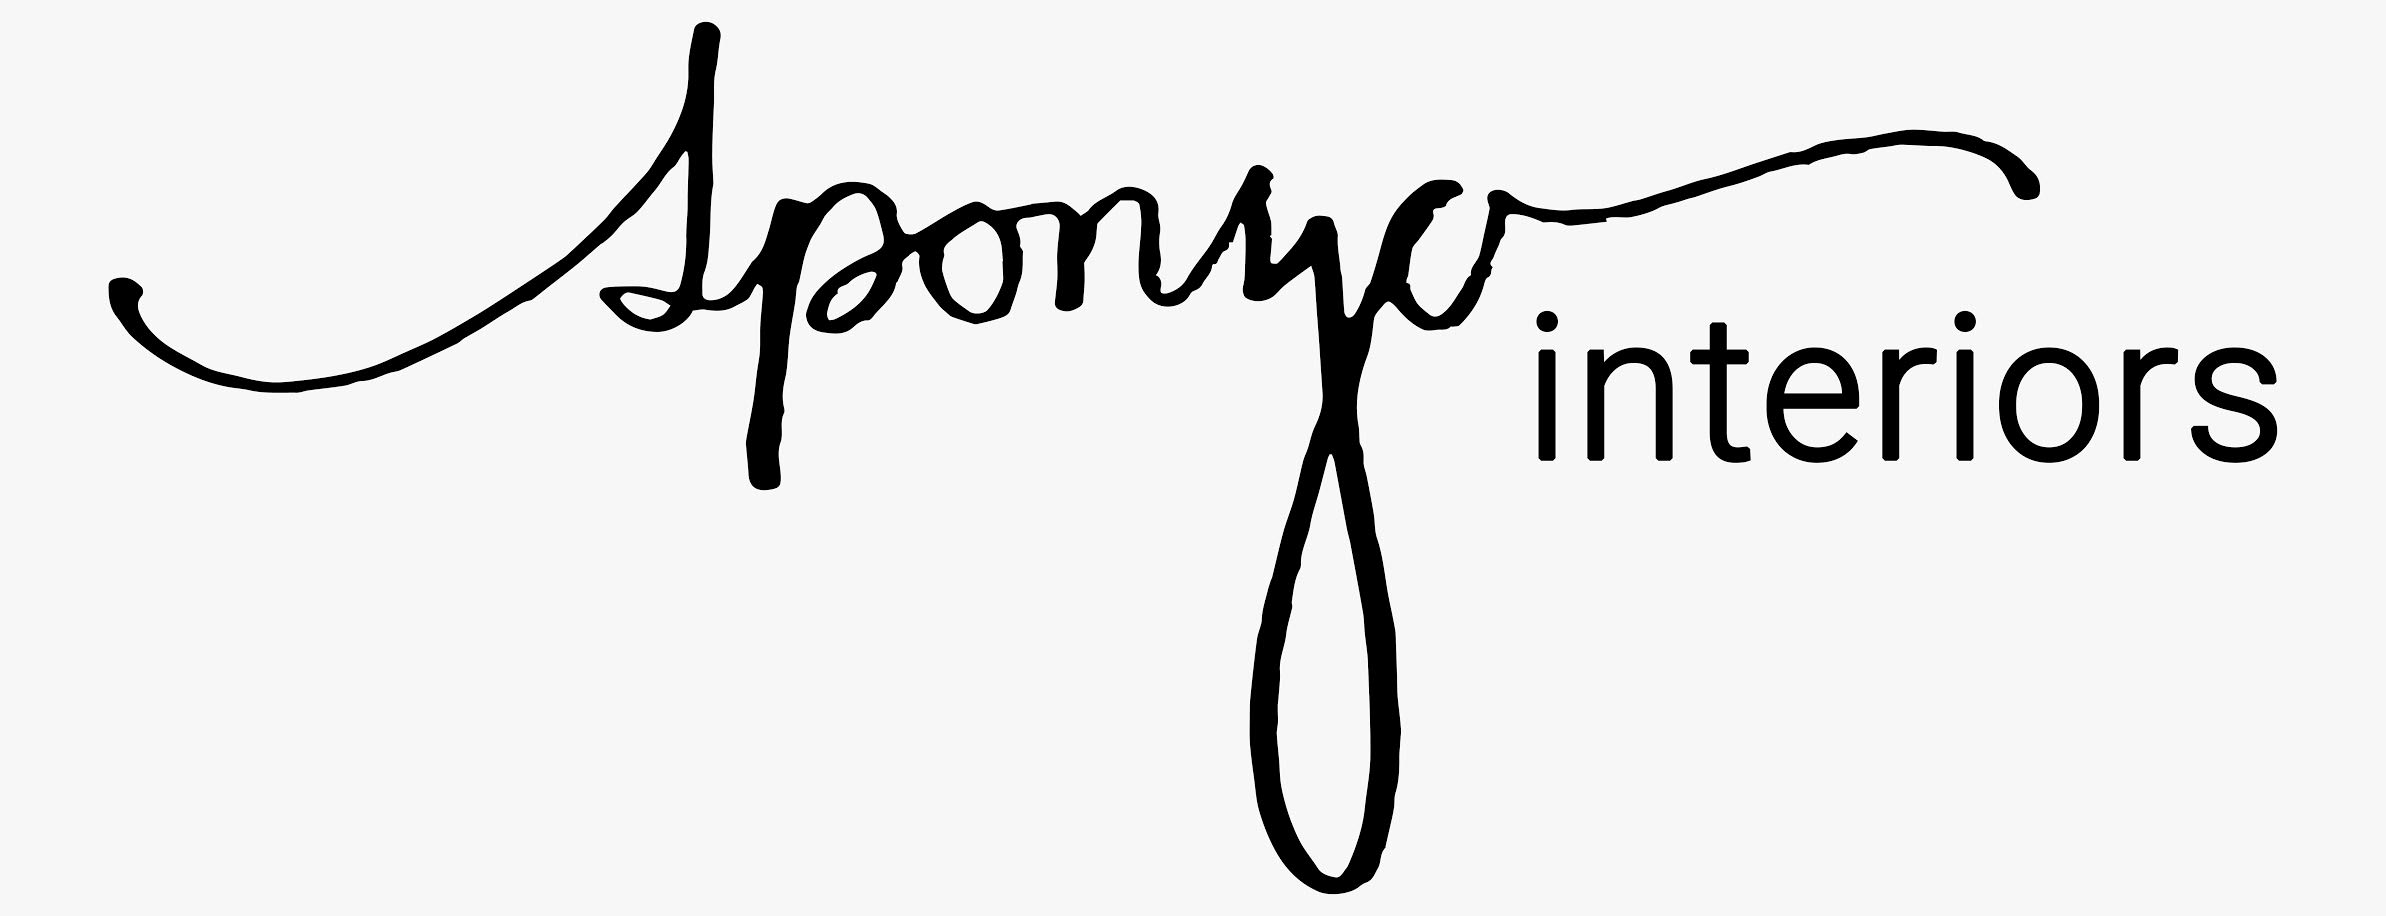 Sponzo Interiors LLC Logo